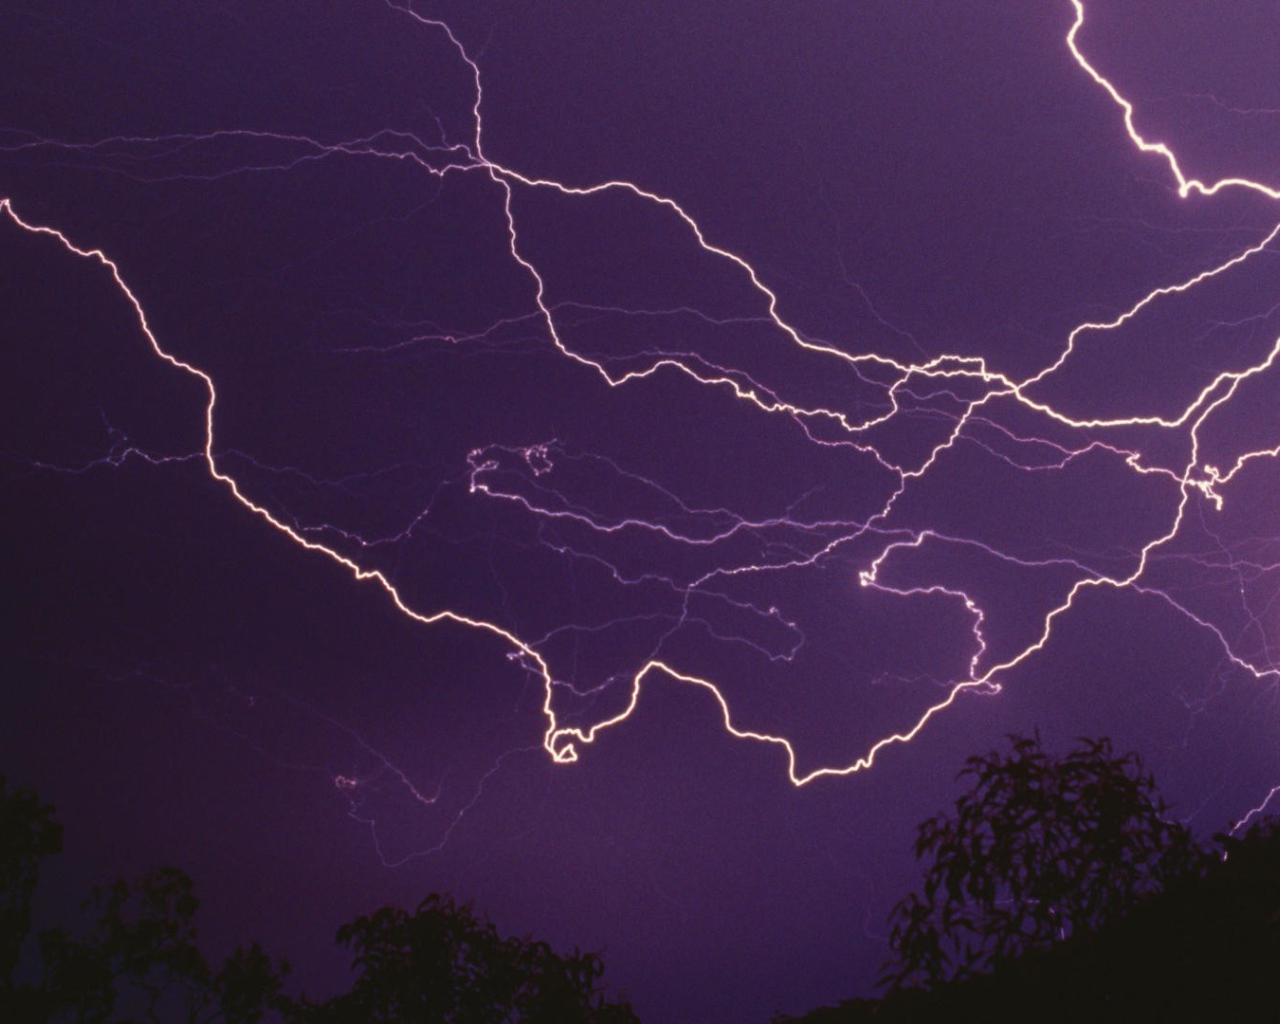 Lightning in the purple sky at night